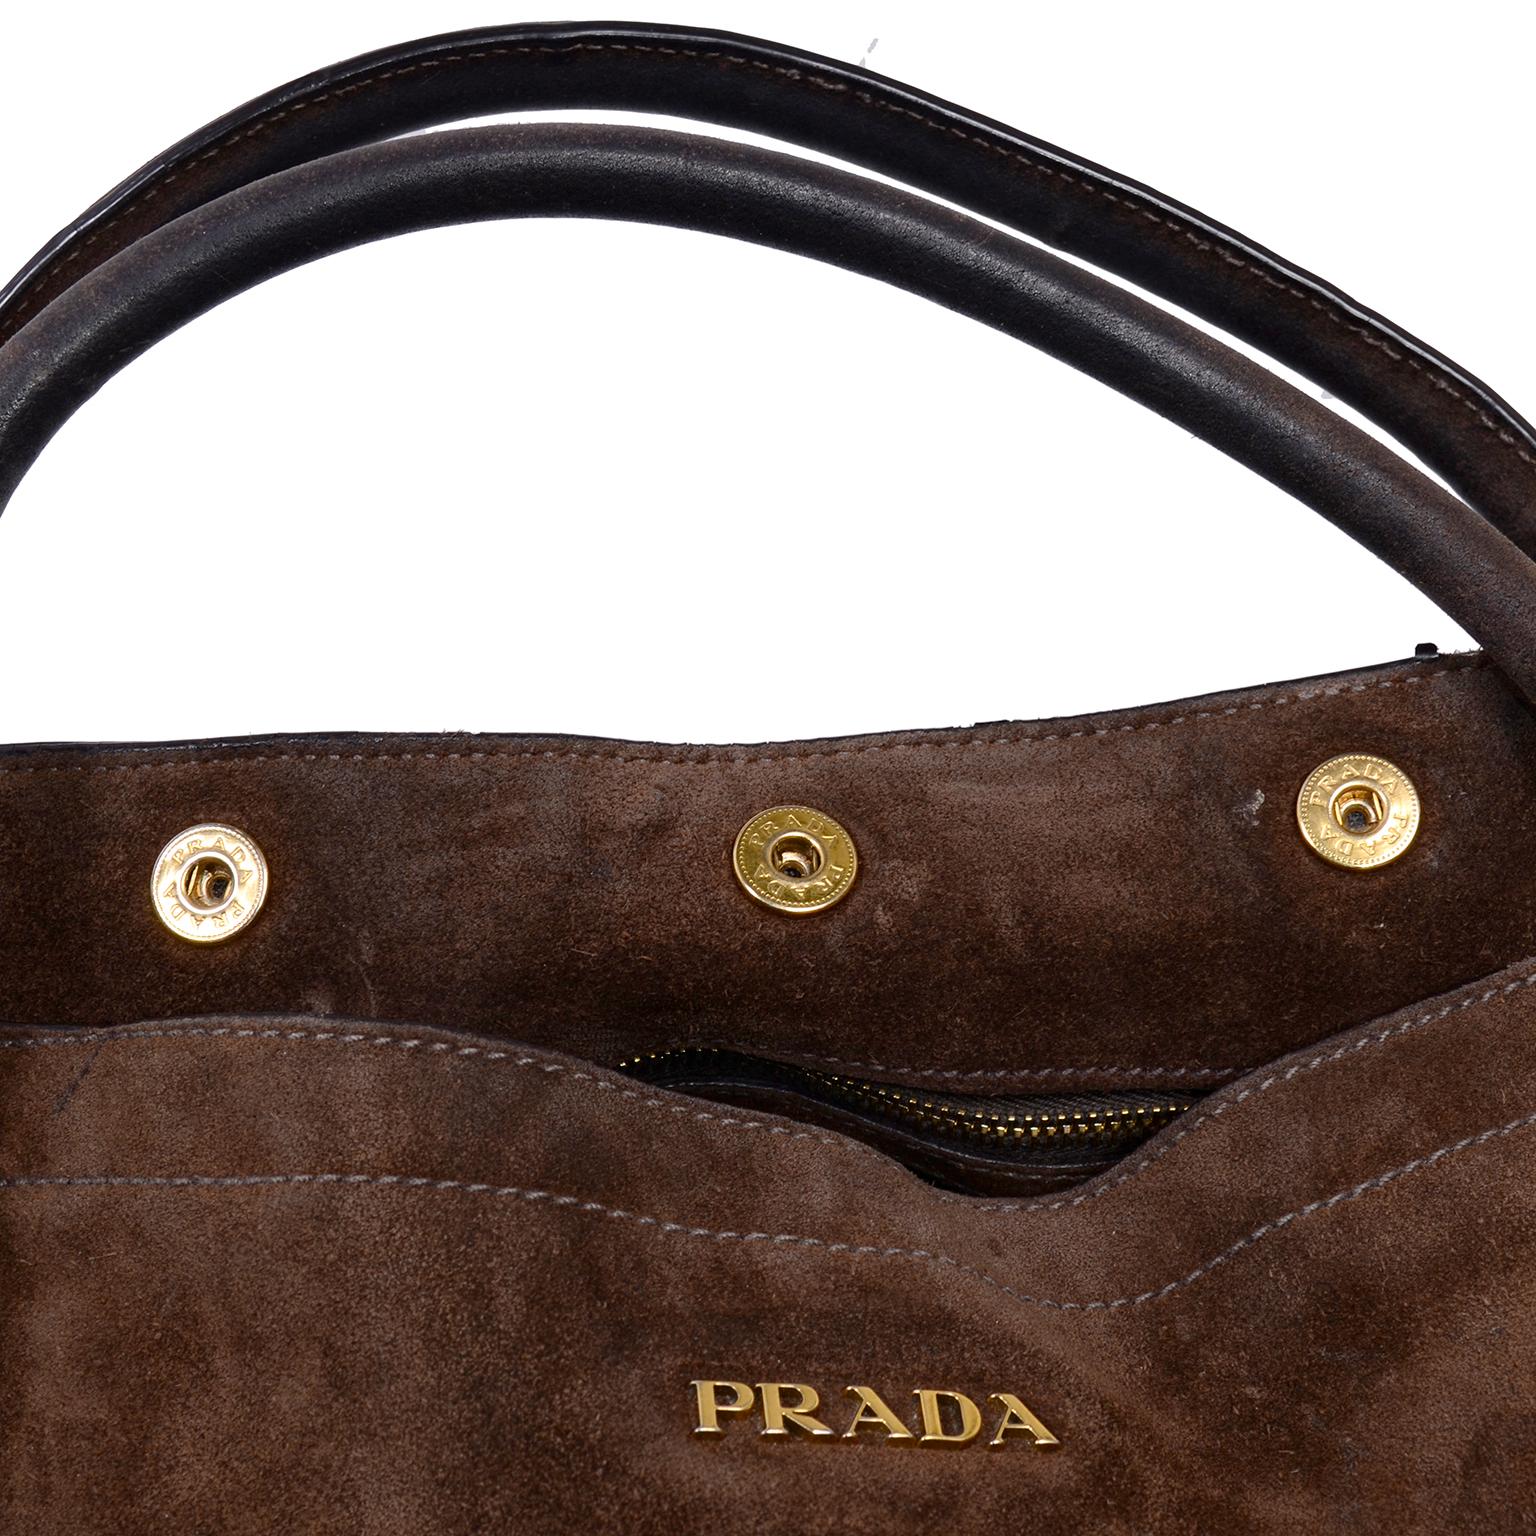 prada chocolate brown handbag